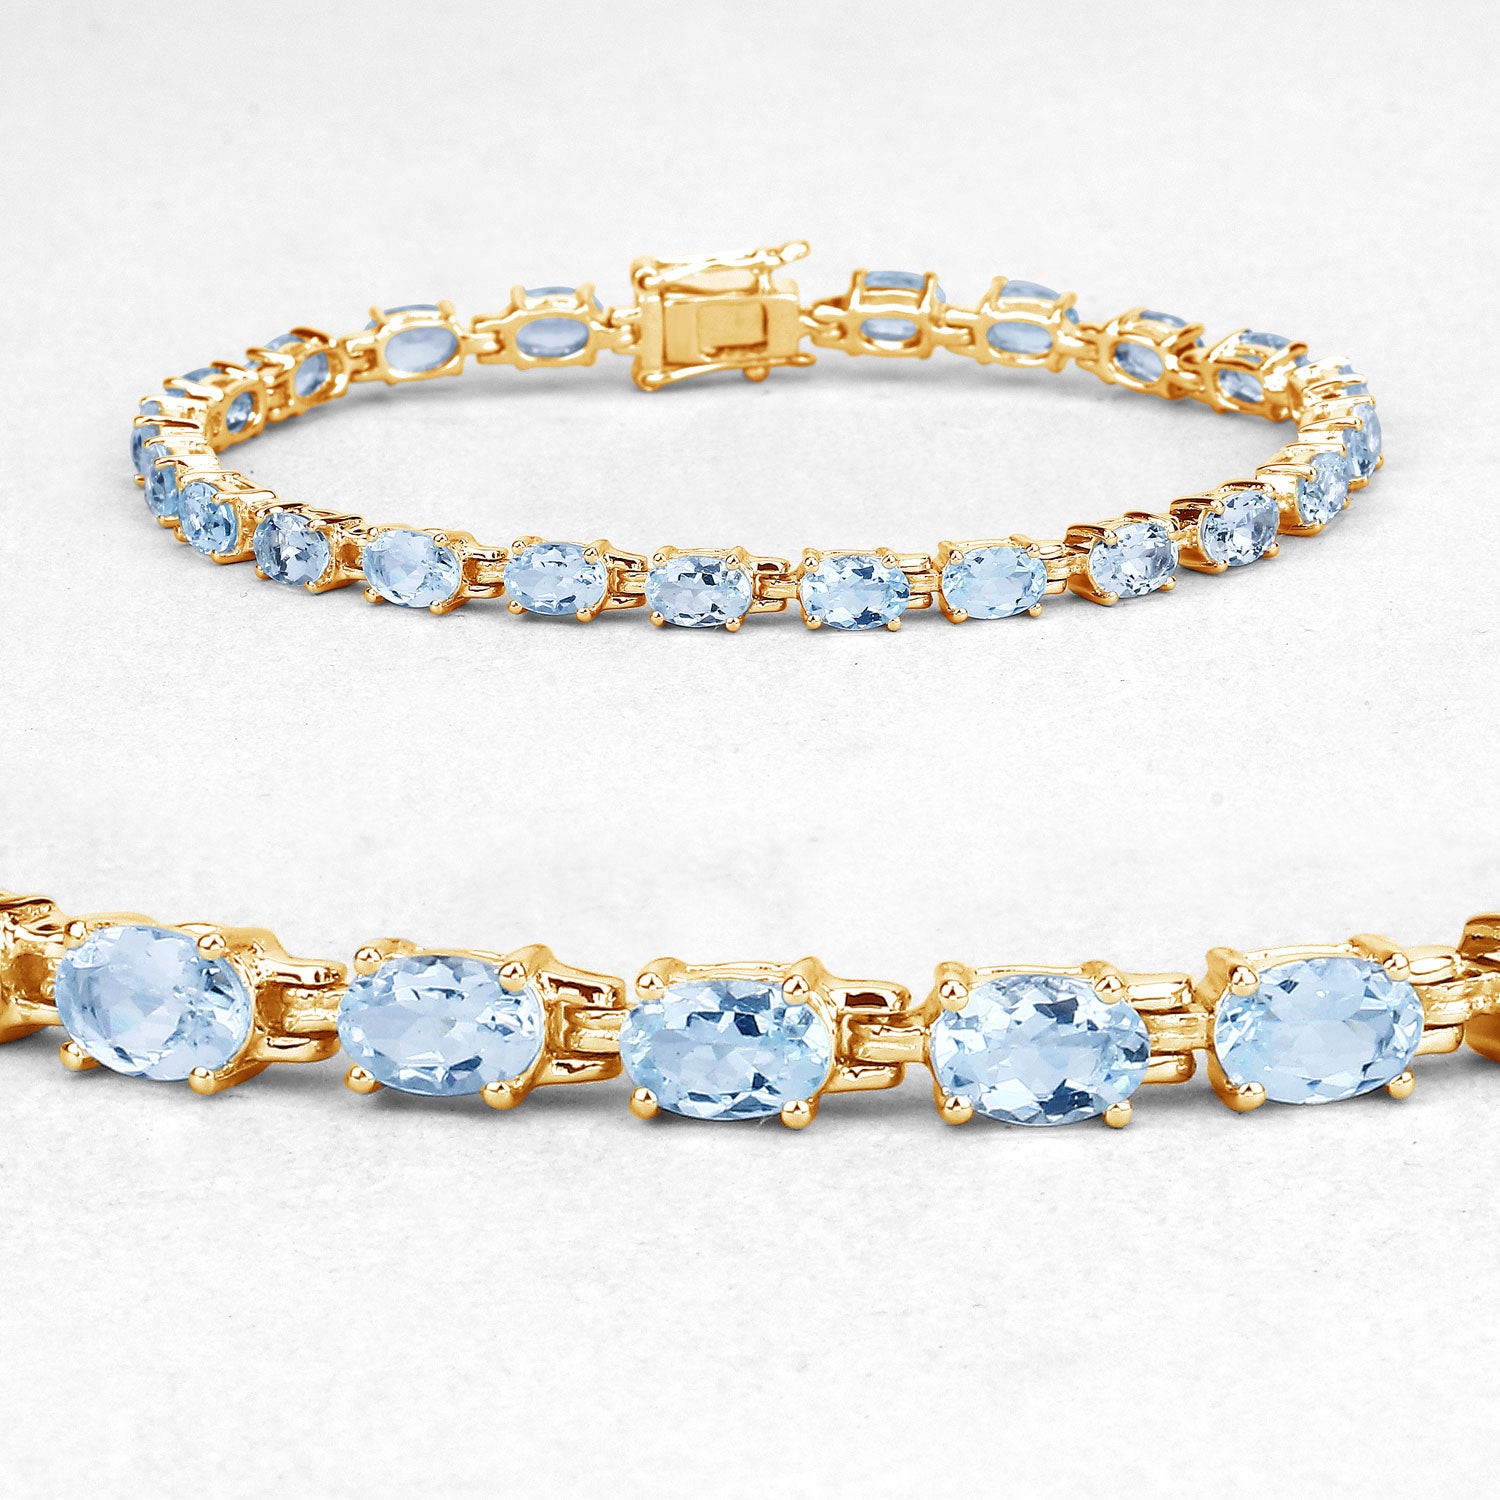 11.22 Carat Genuine Blue Topaz Sterling Silver Bracelet: Timeless Elegance and Radiant Beauty